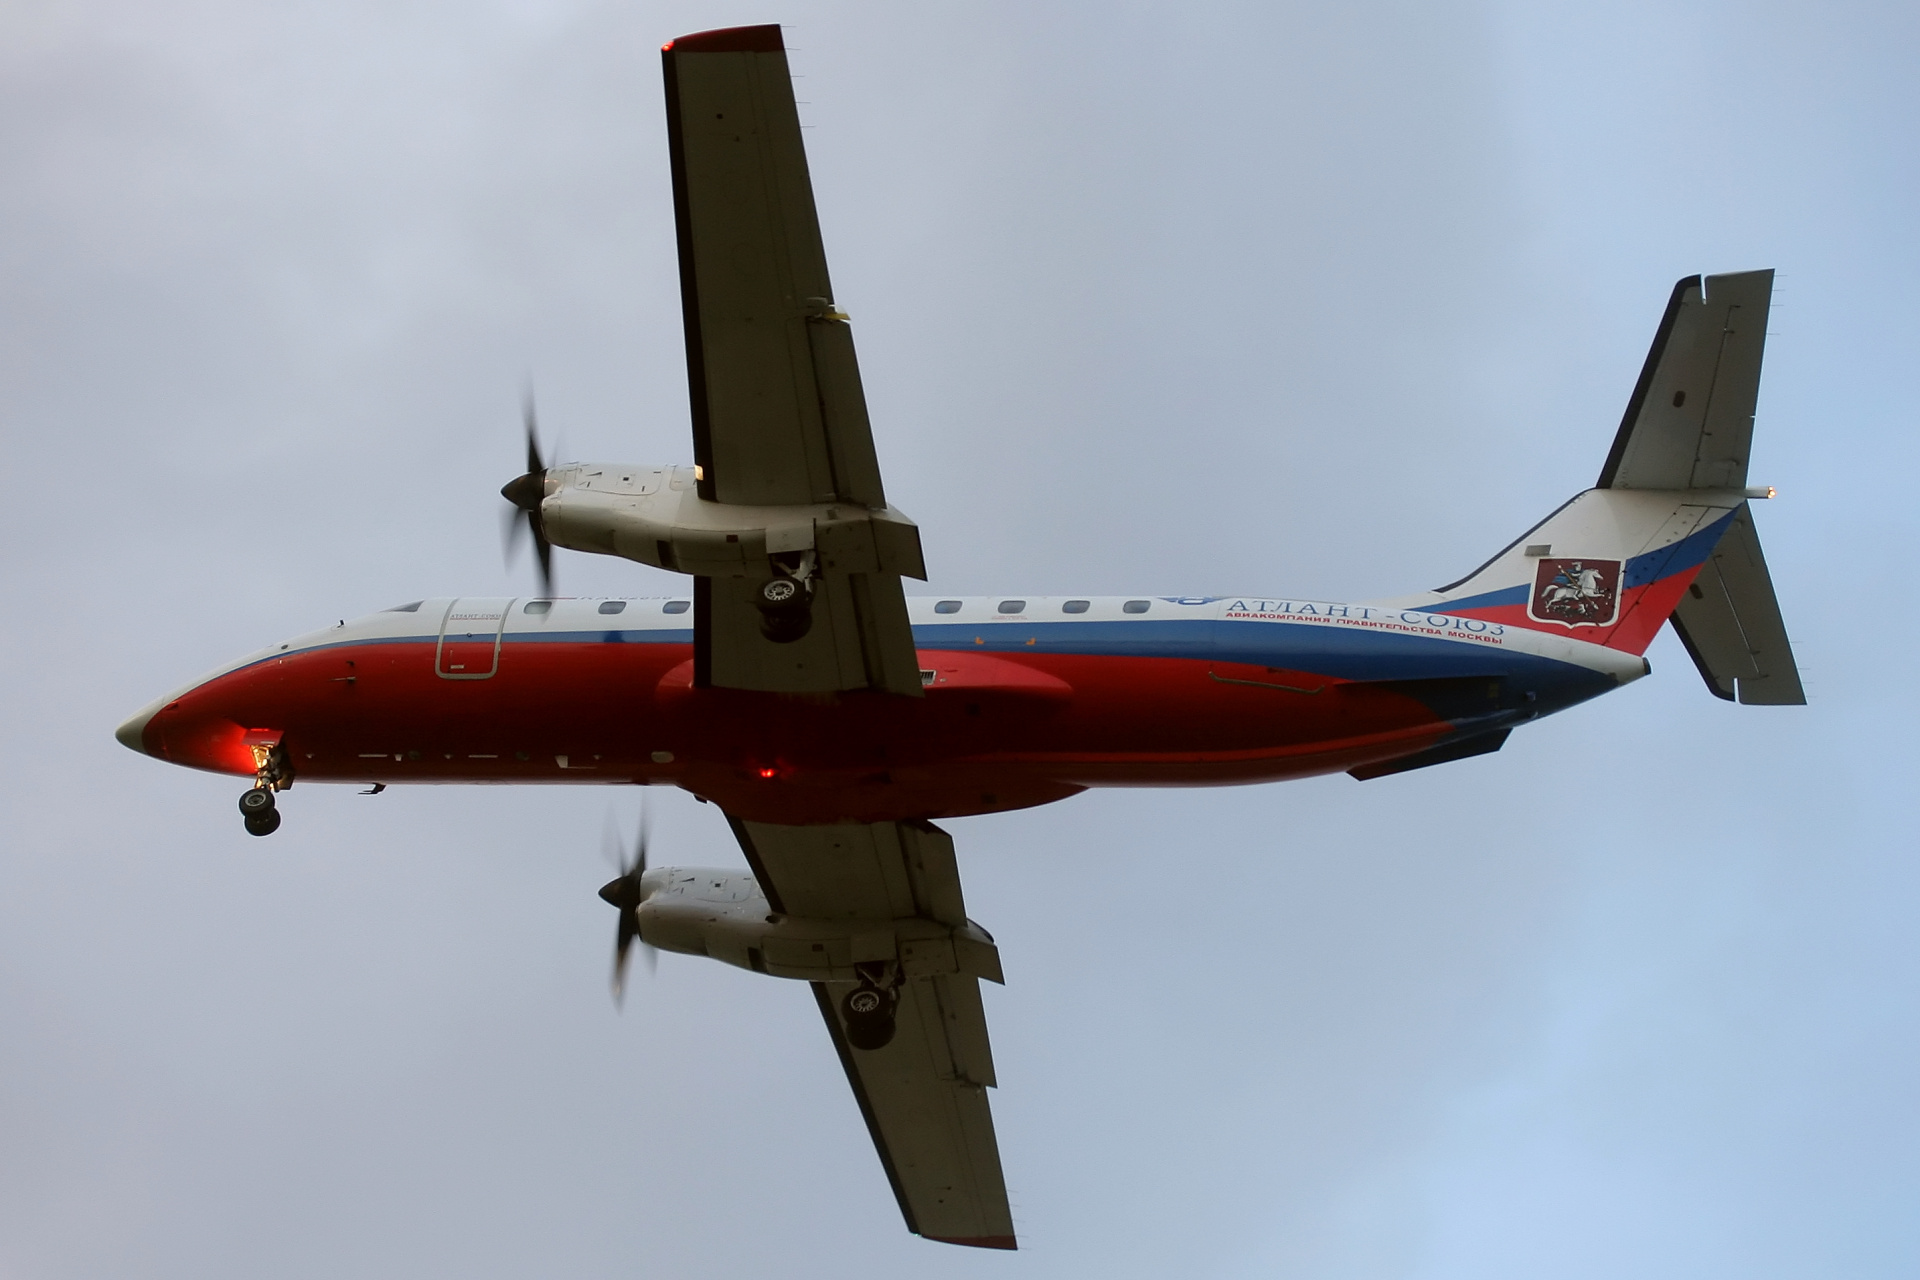 RA-02856, Atlant-Soyuz (Aircraft » EPWA Spotting » Embraer EMB-120 Brasilia)